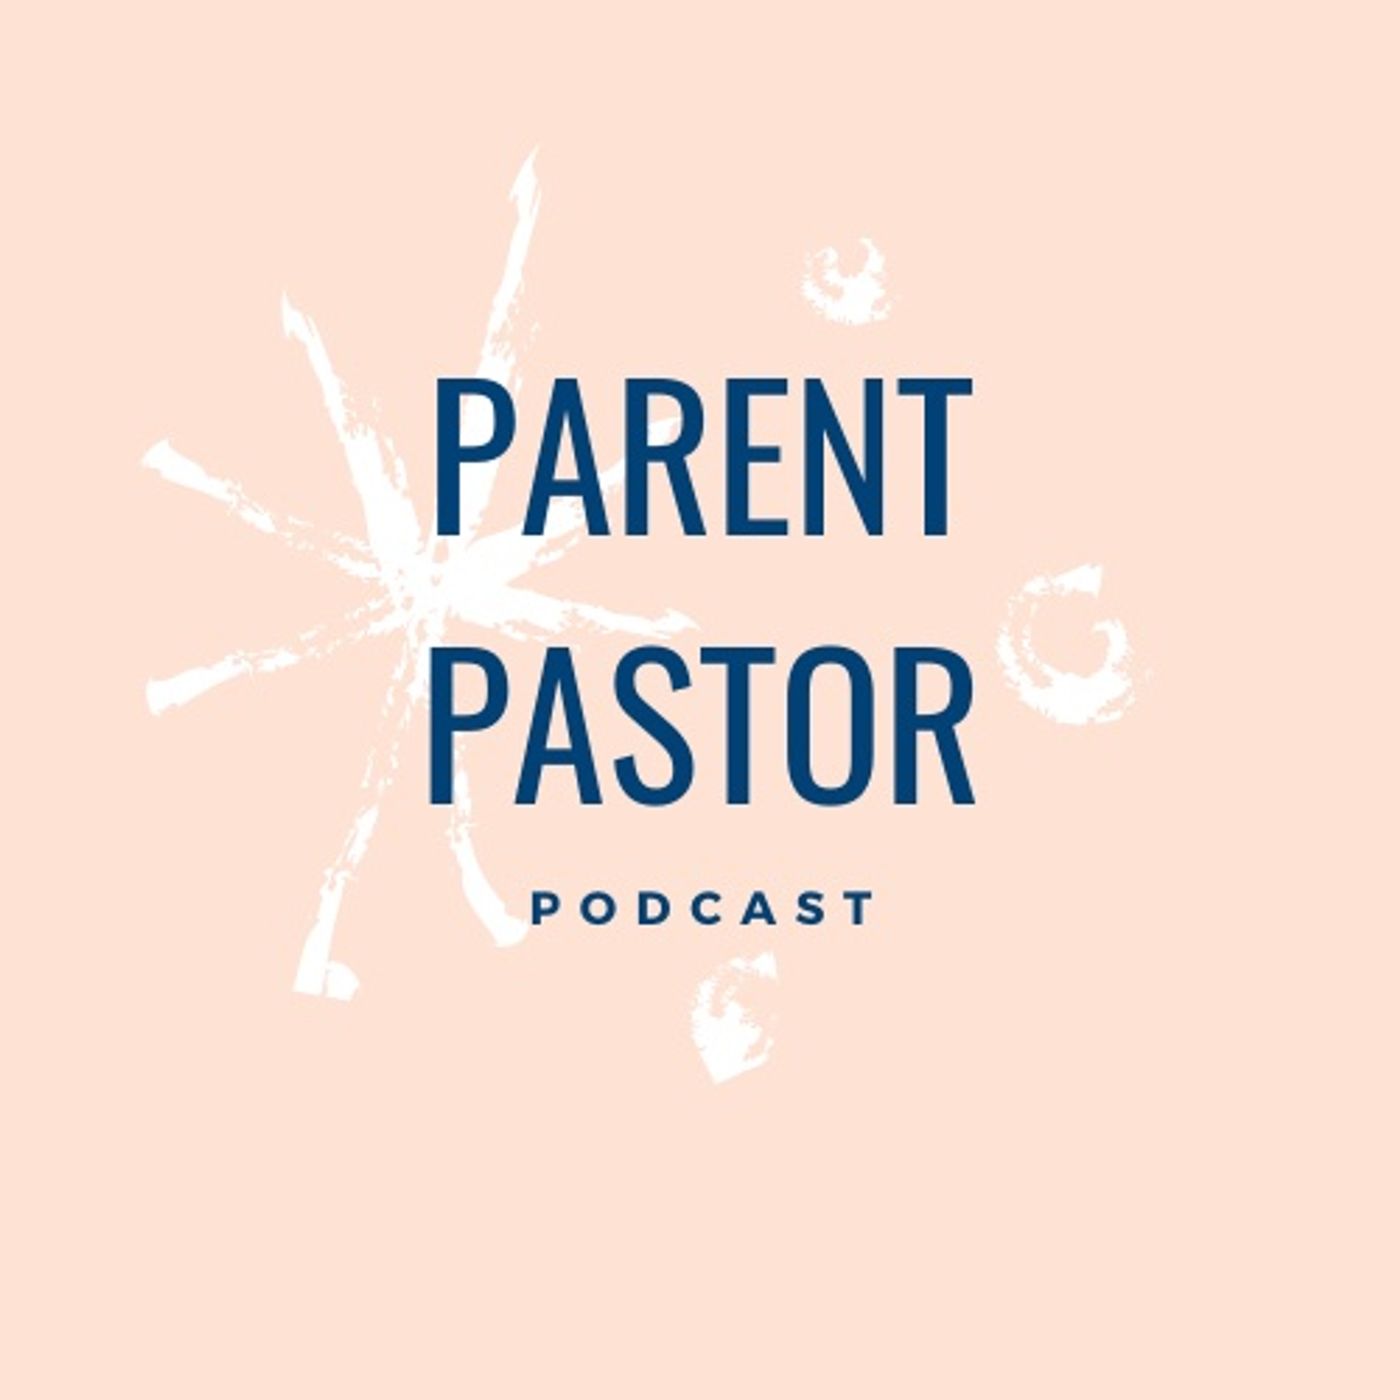 Parent Pastor Podcast